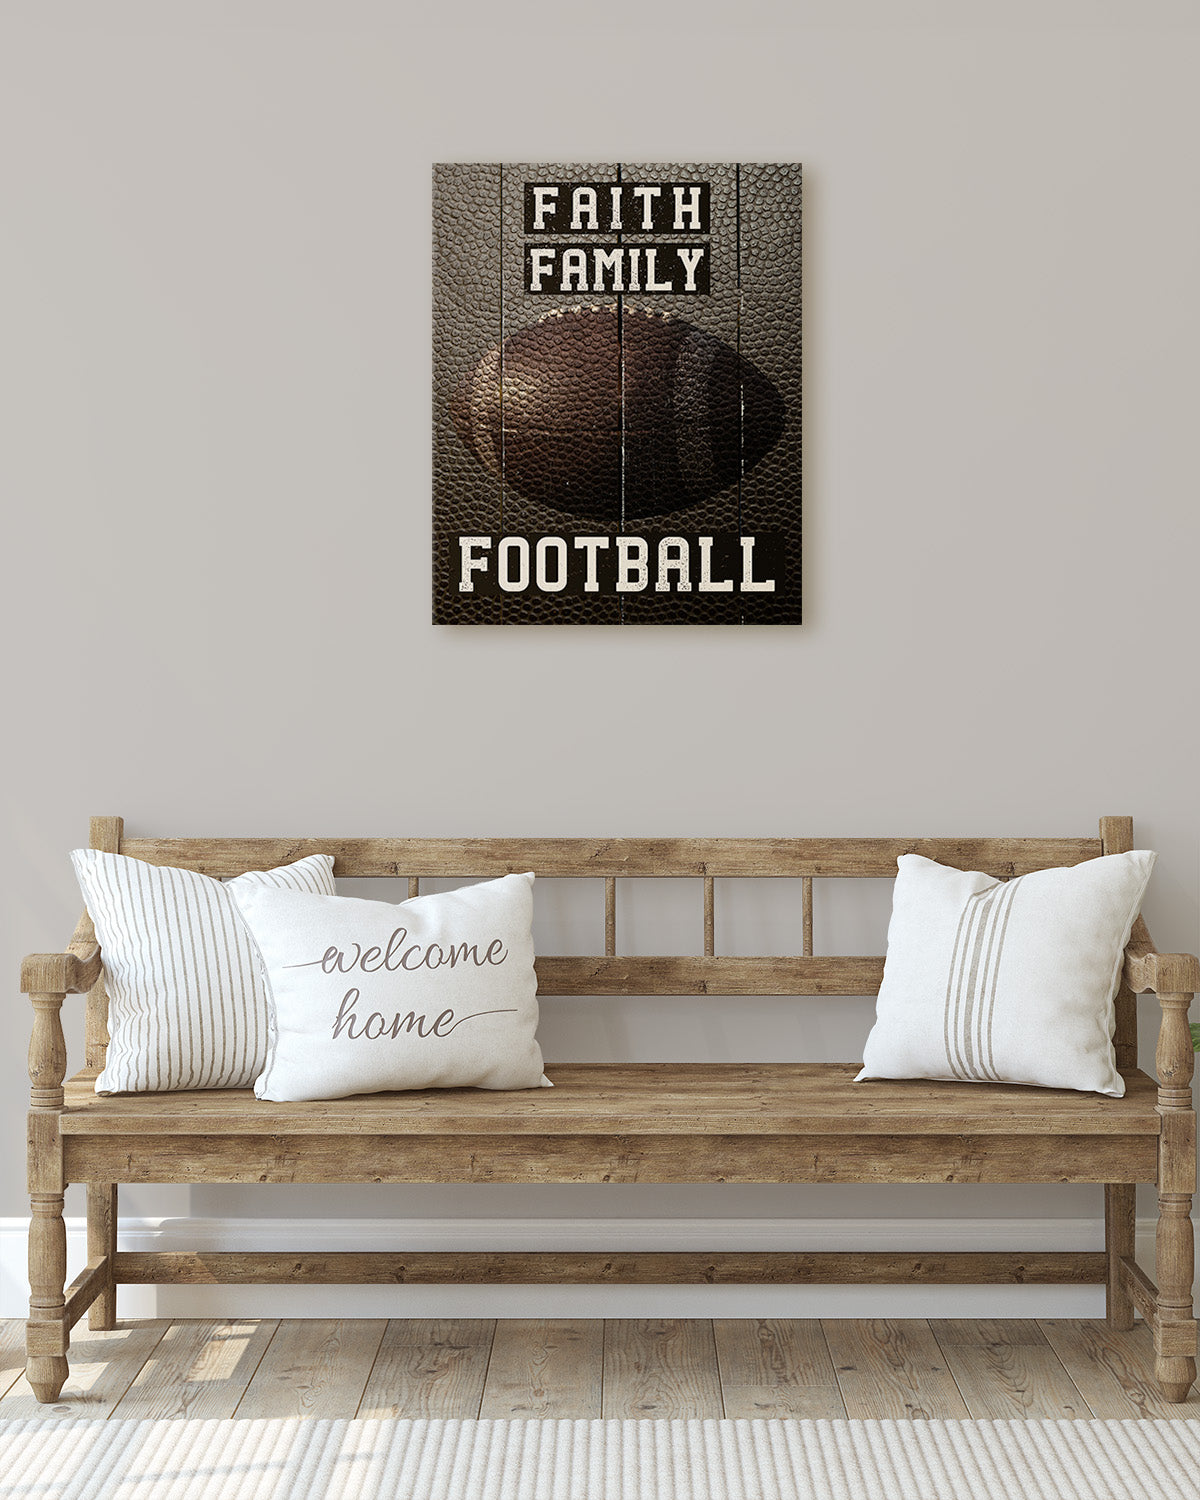 Faith Family Football Teen Room Decor - Inspirational Wall Art for Boys, Kids Room, Family or Game Room, Man Cave, Den - Home Decor Gift for Sports Fans, Football Players